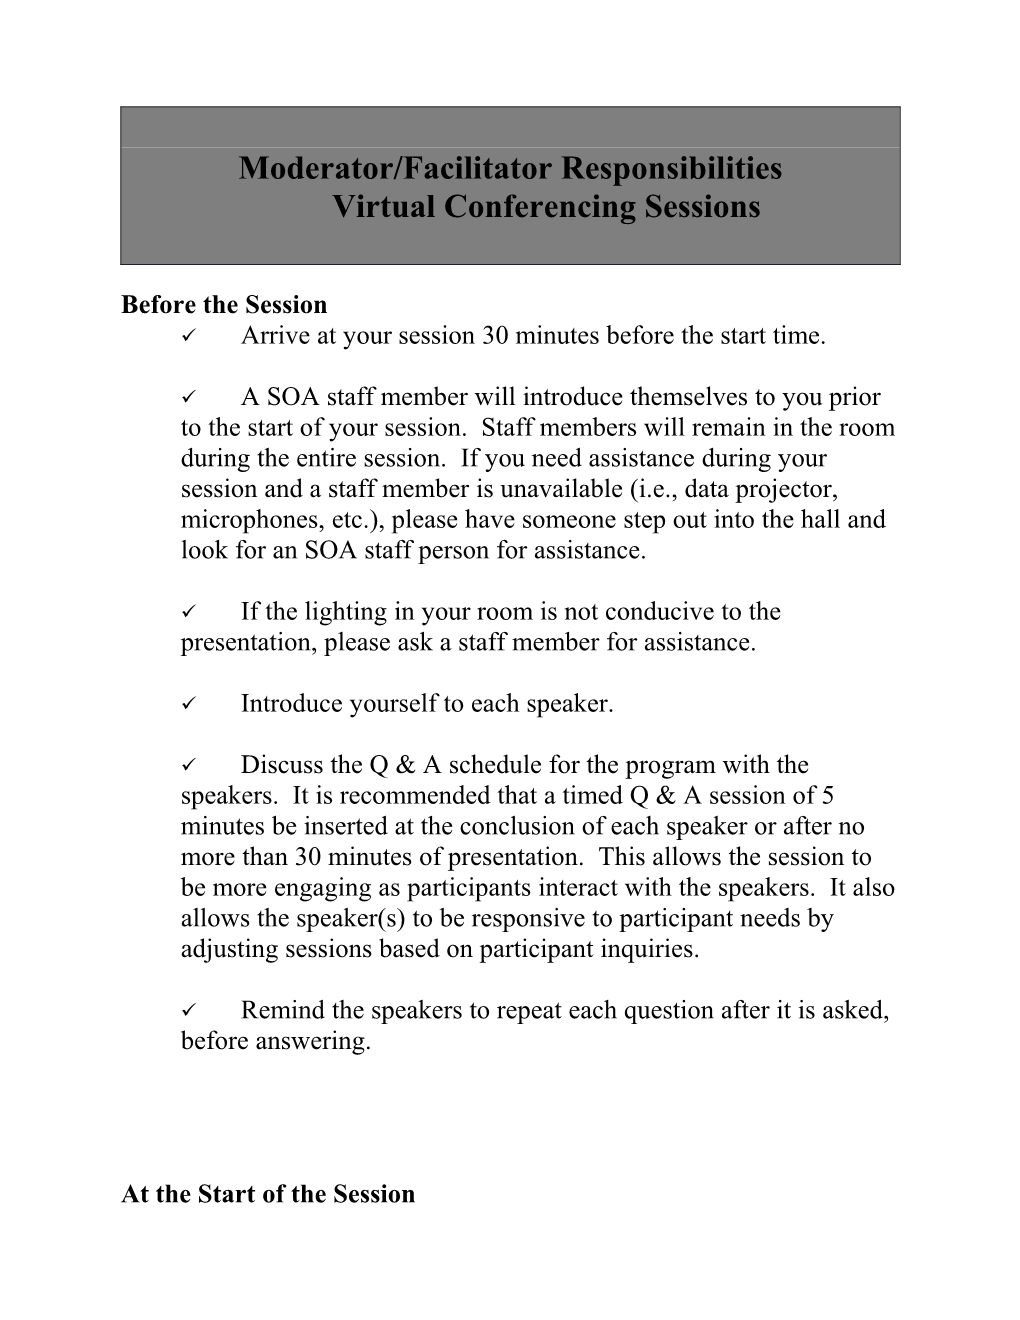 Moderator/Facilitator Responsibilities Virtual Conferencing Sessions